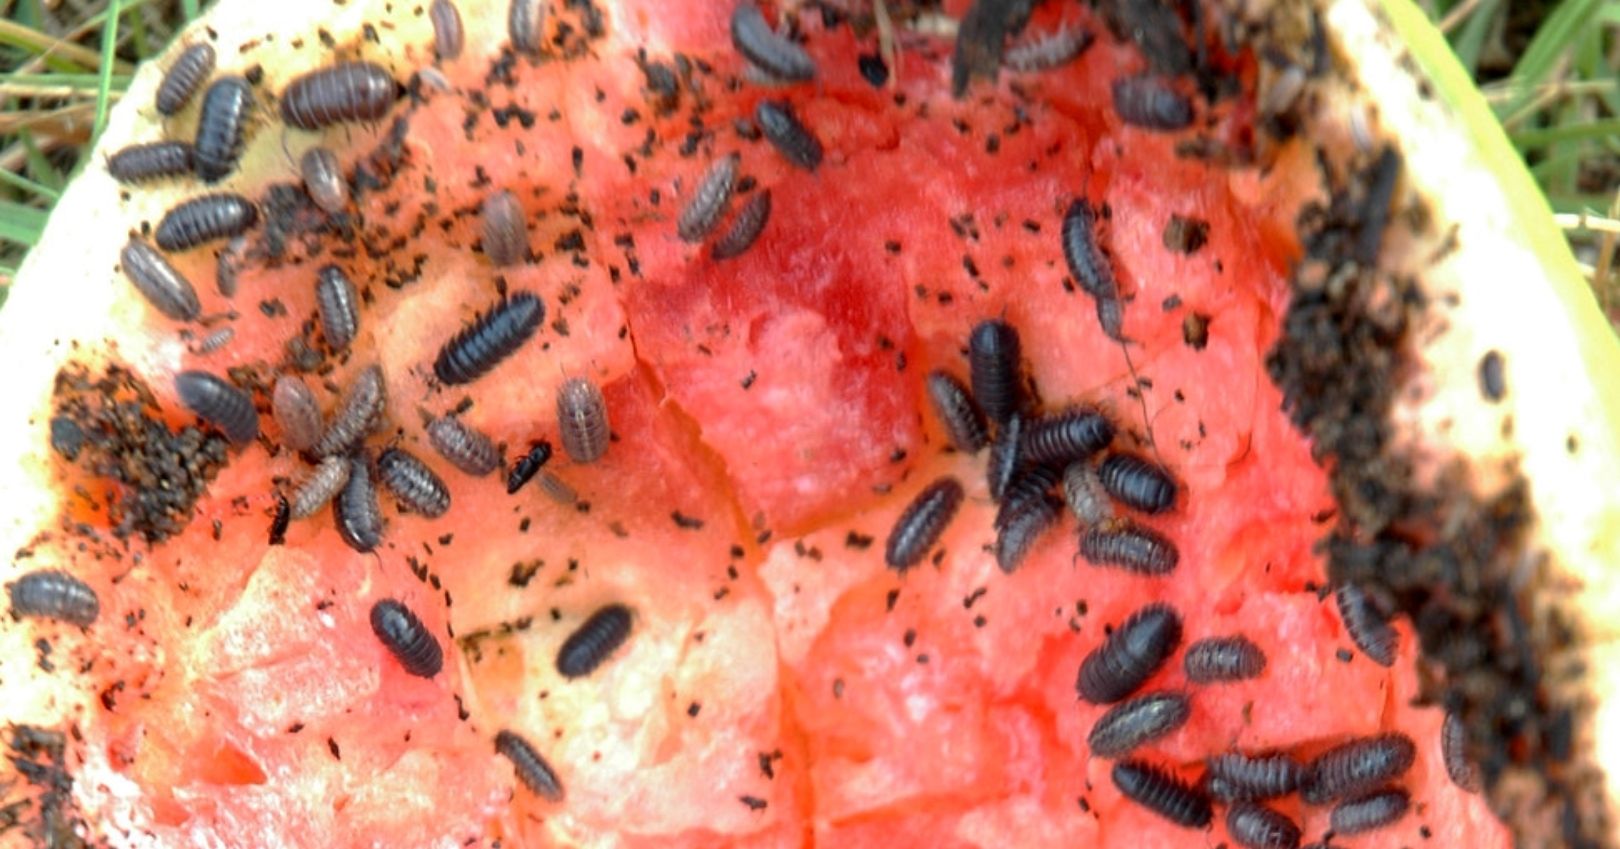 Sowbug/Pillbug Feeding on Watermelon (© 2009 Caroline Homer)